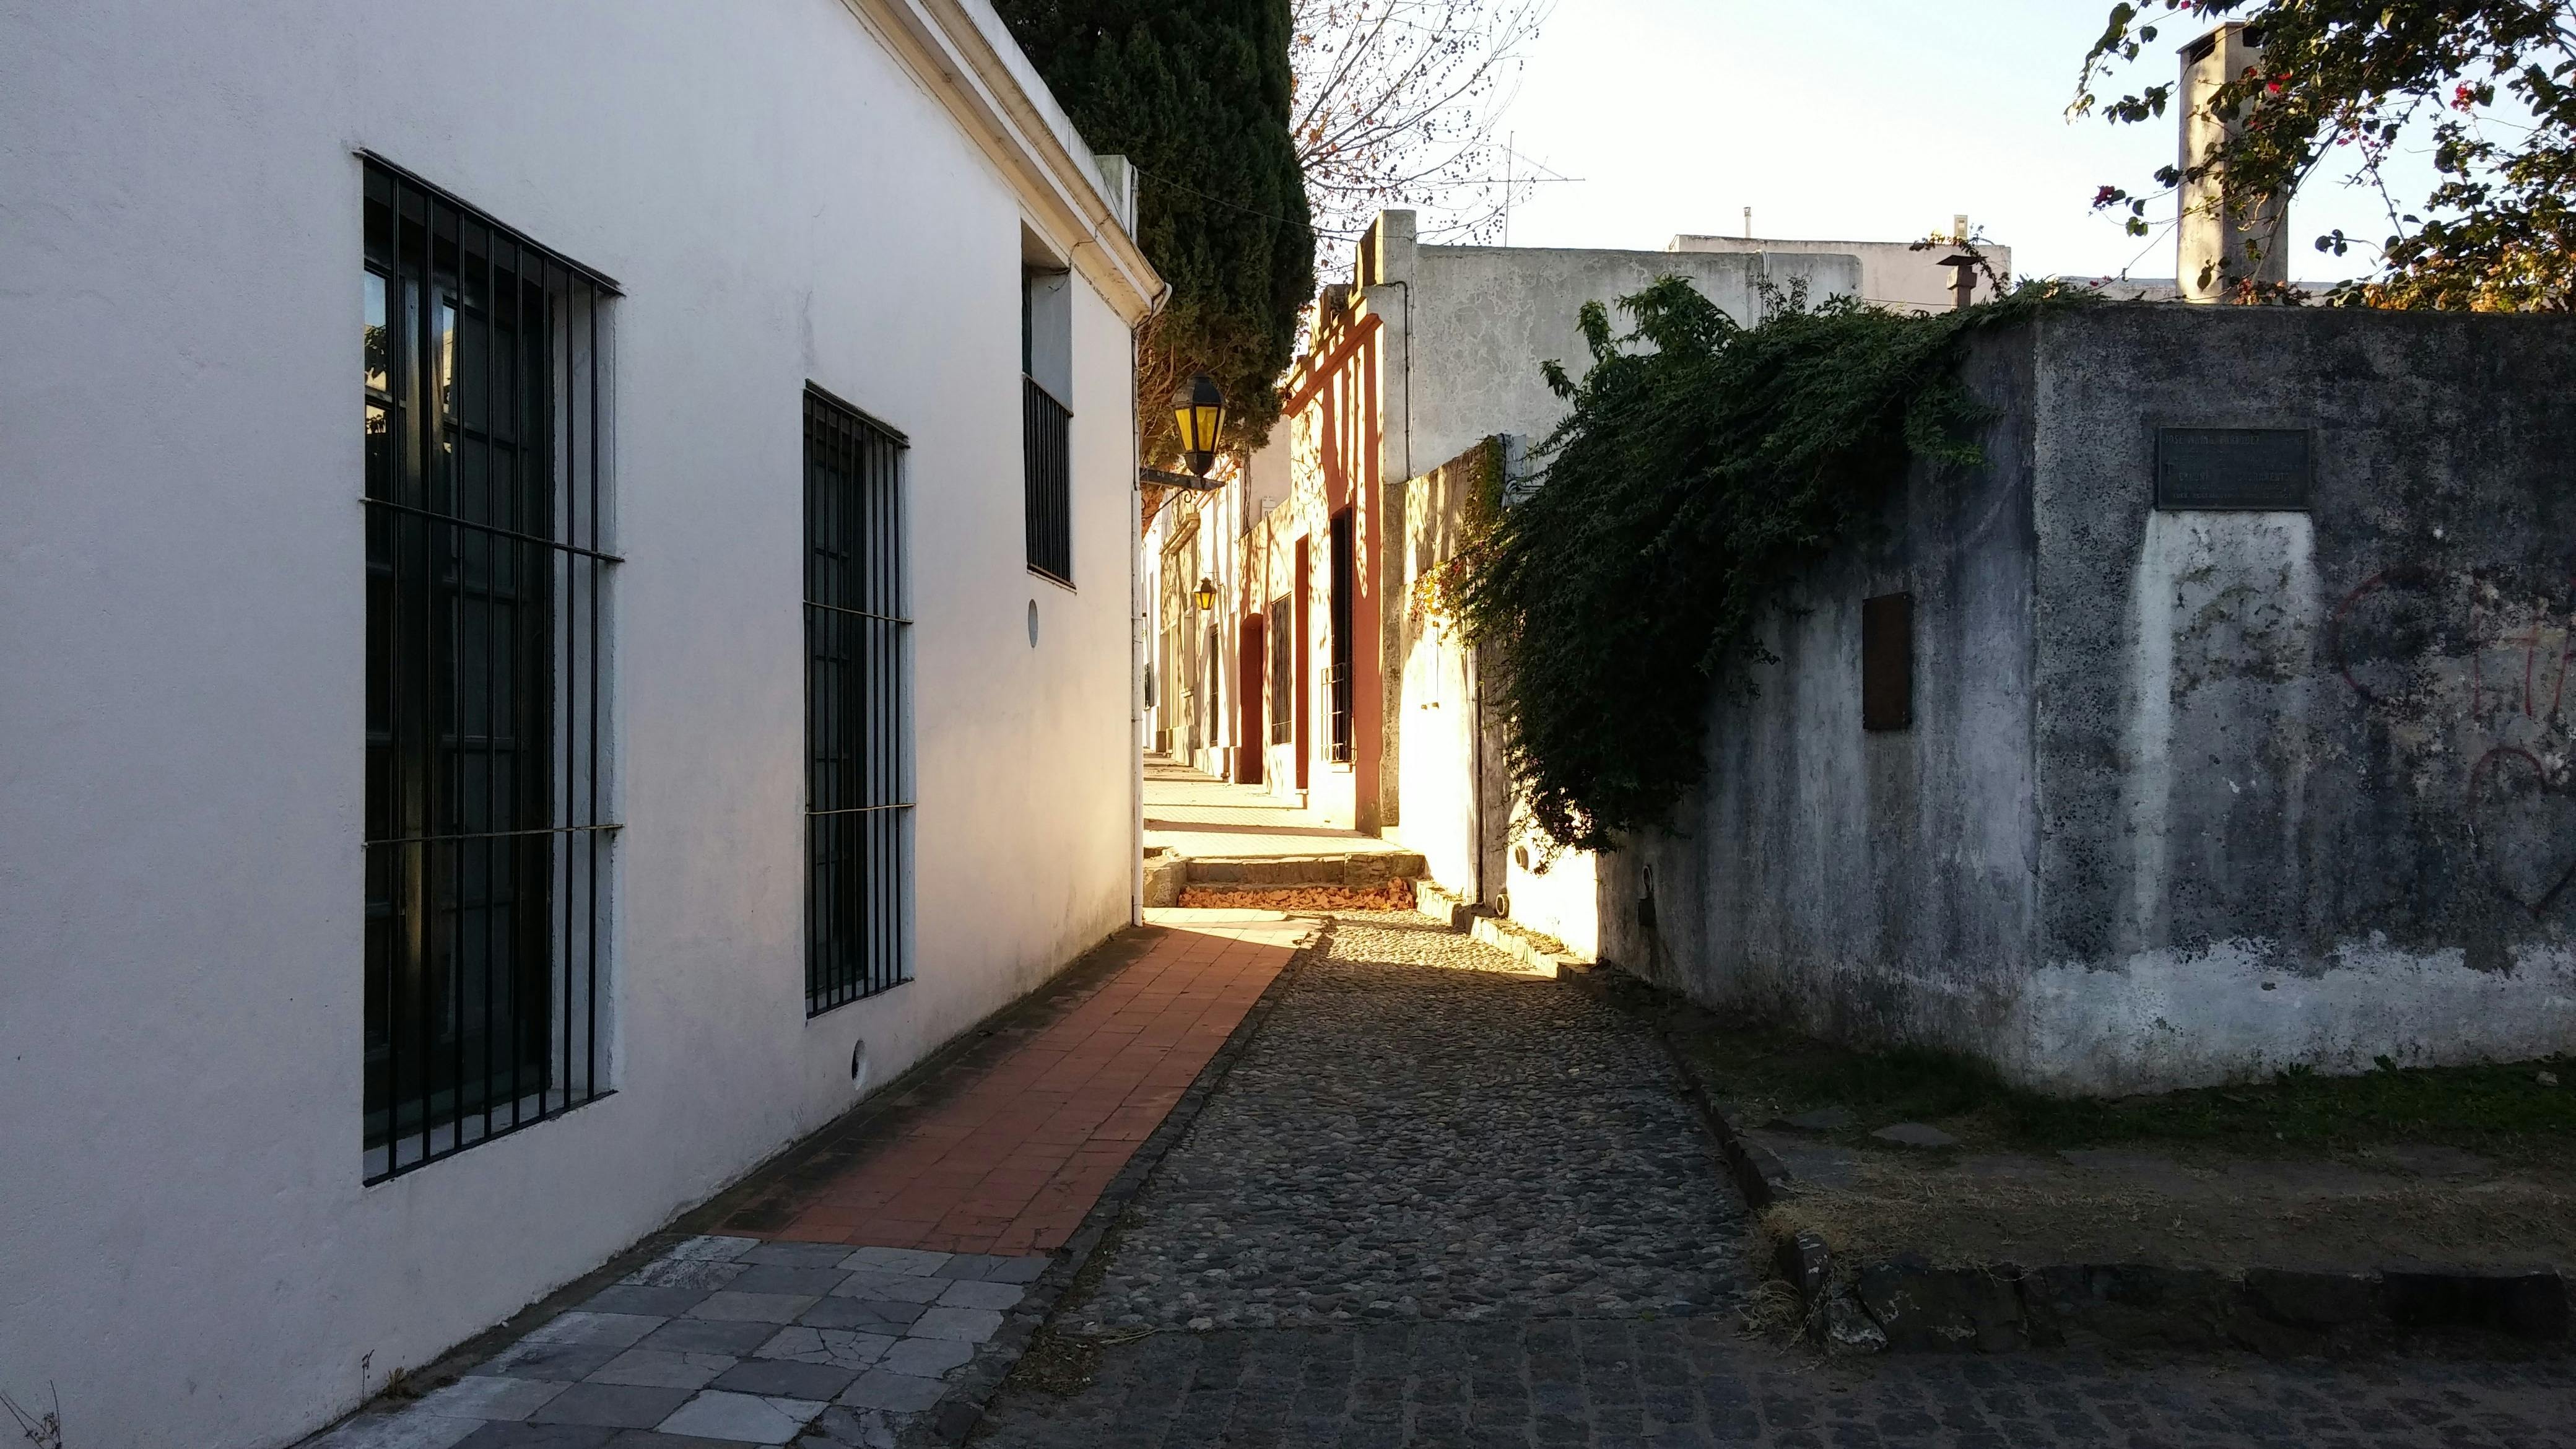 Free stock photo of colonia uruguay colonial city